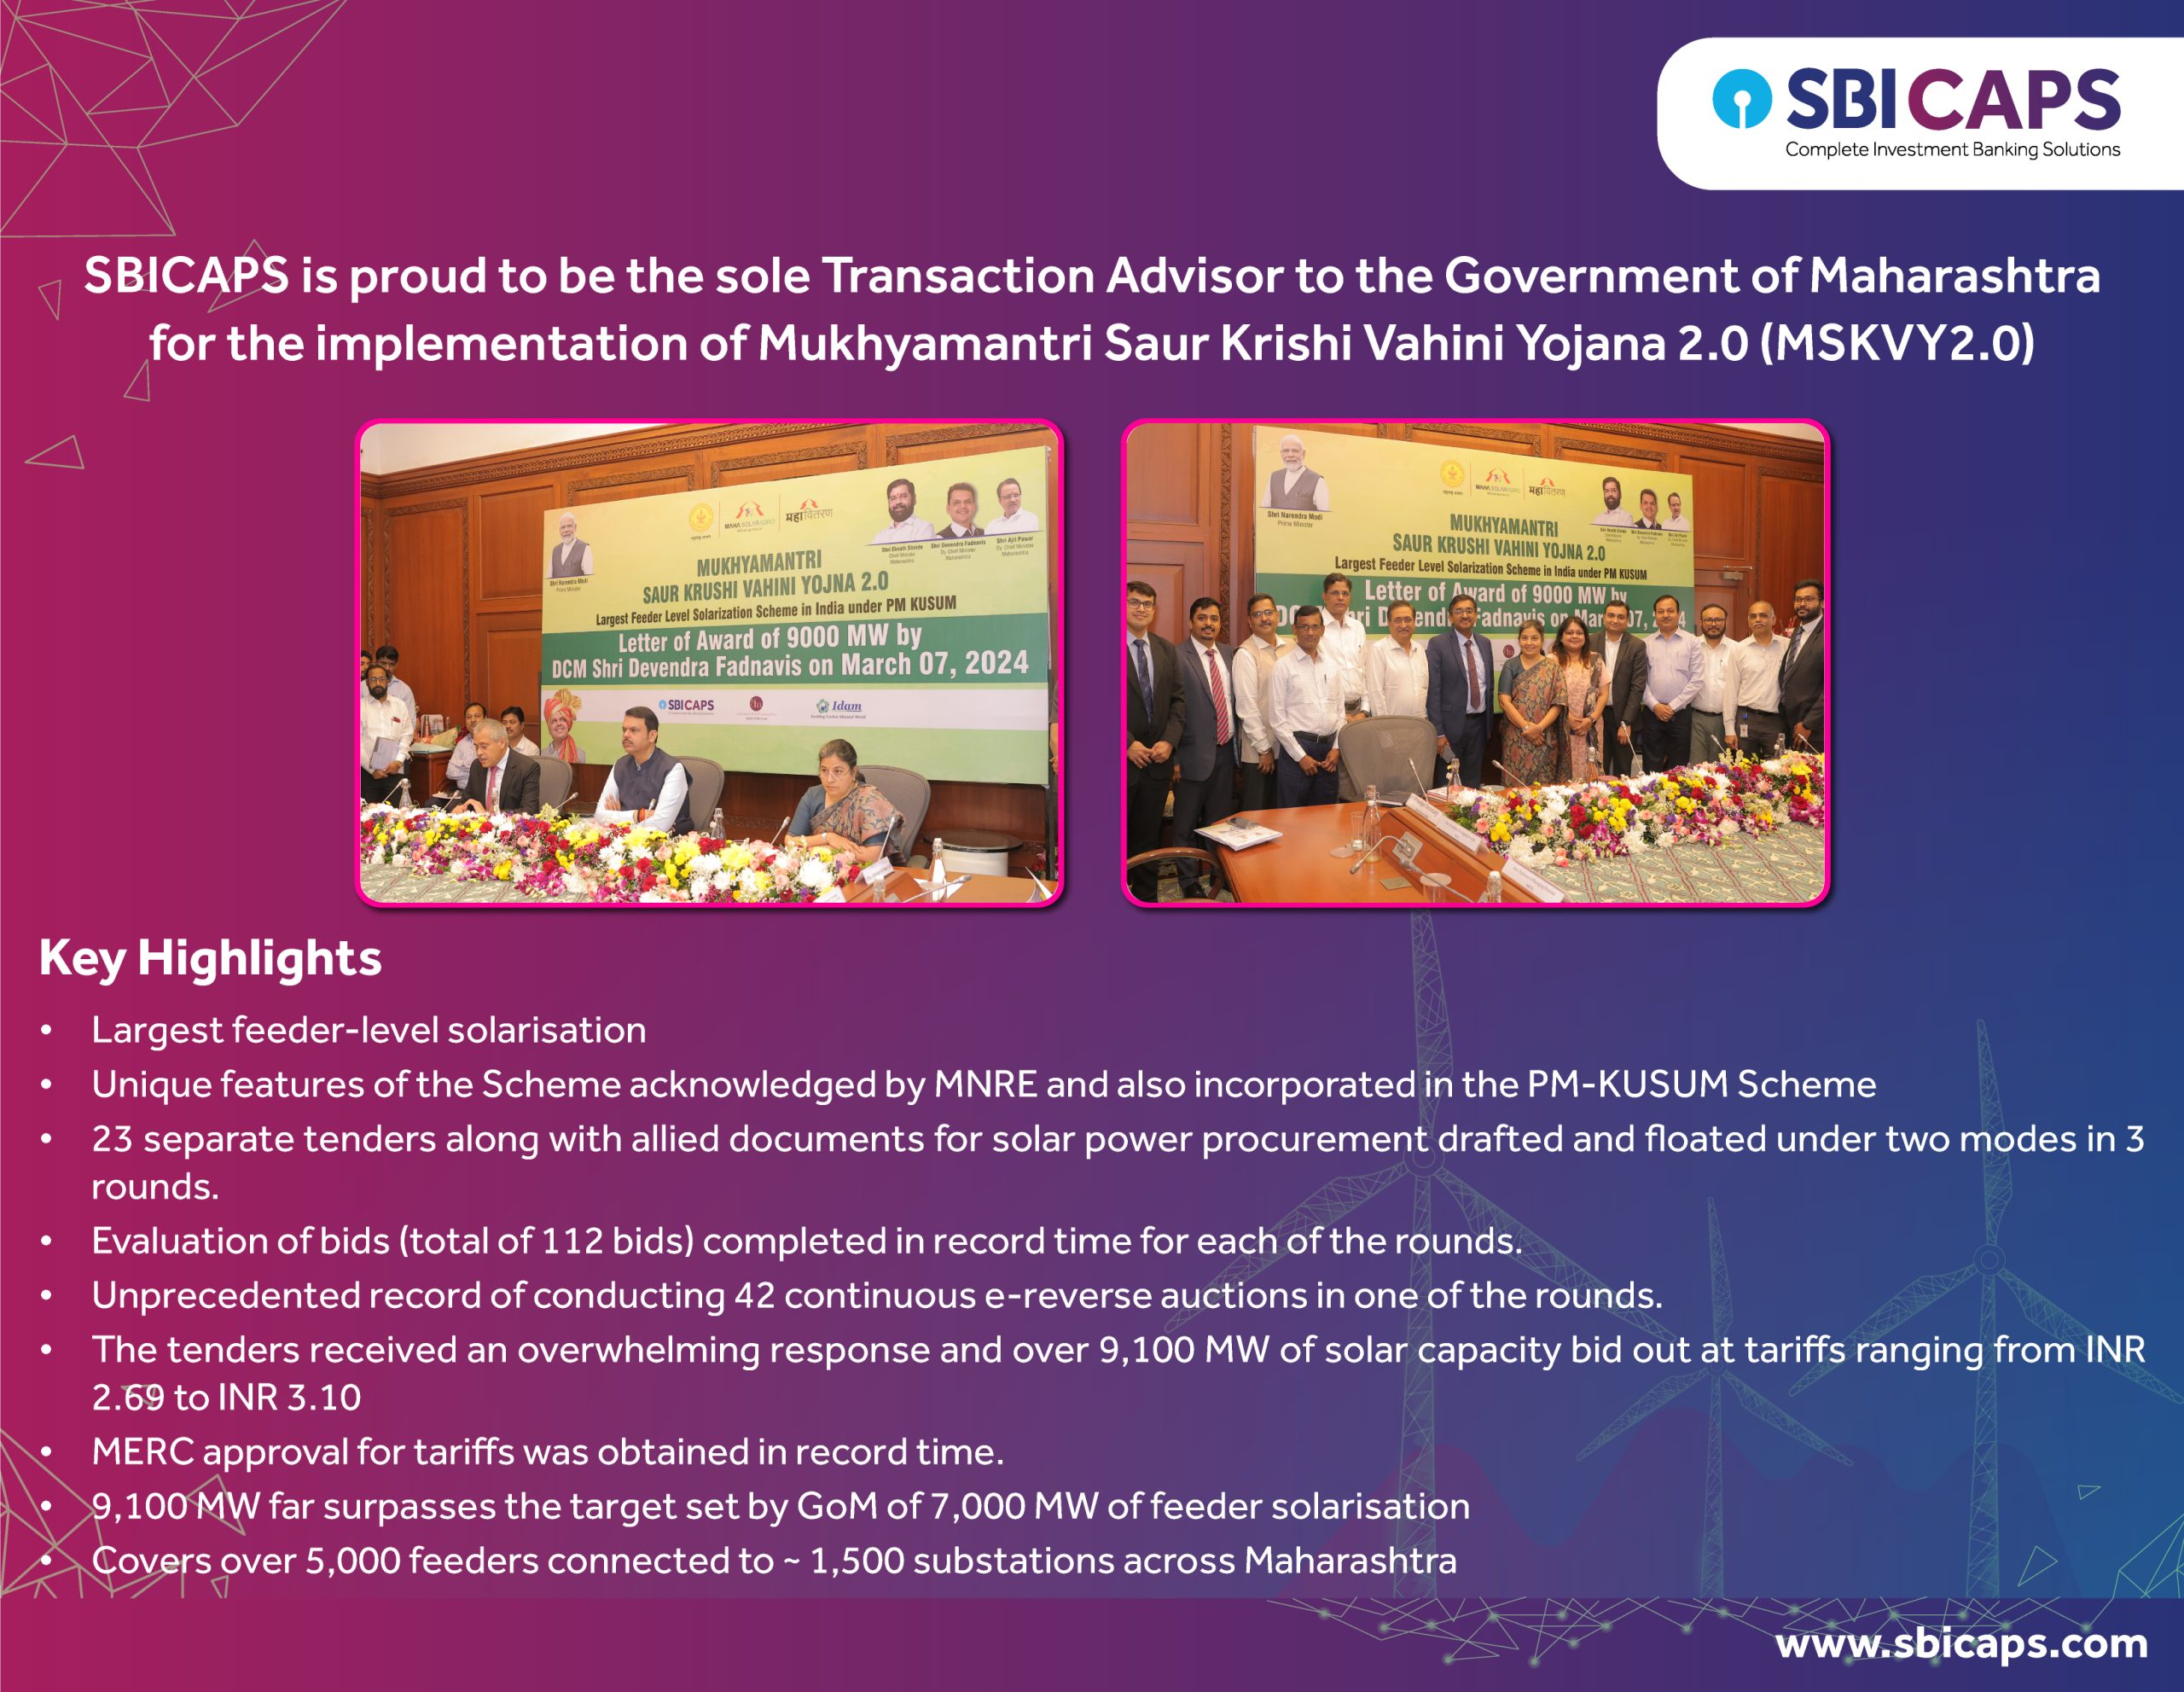 SBICAPS is proud to be the sole Transaction Advisor to Government of Maharashtra for the implementation of Mukhyamantri Saur Krishi Vahini Yojana 2.0 (MSKVY2.0)